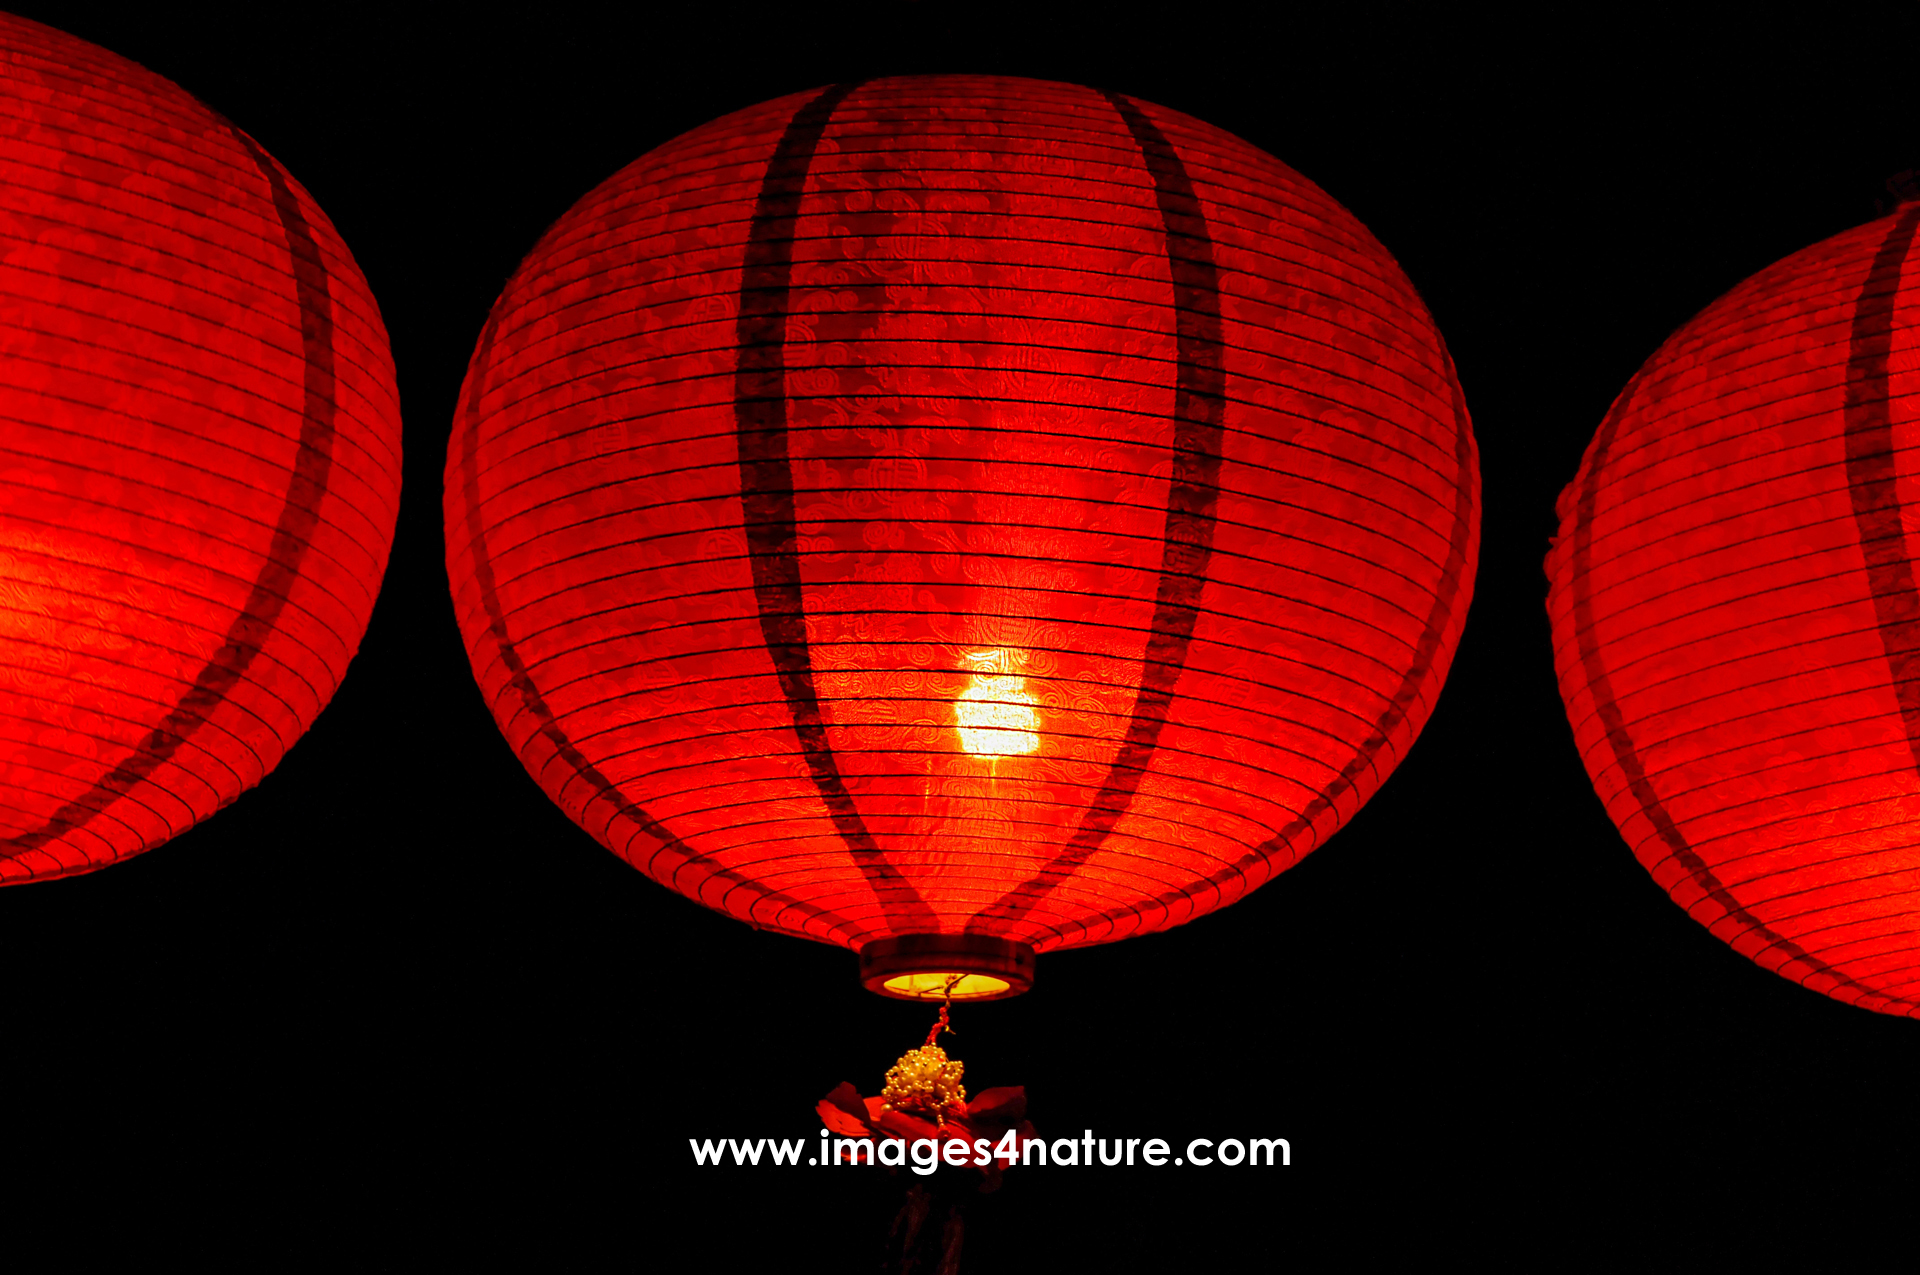 Three glowing red Chinese lanterns at night against dark sky